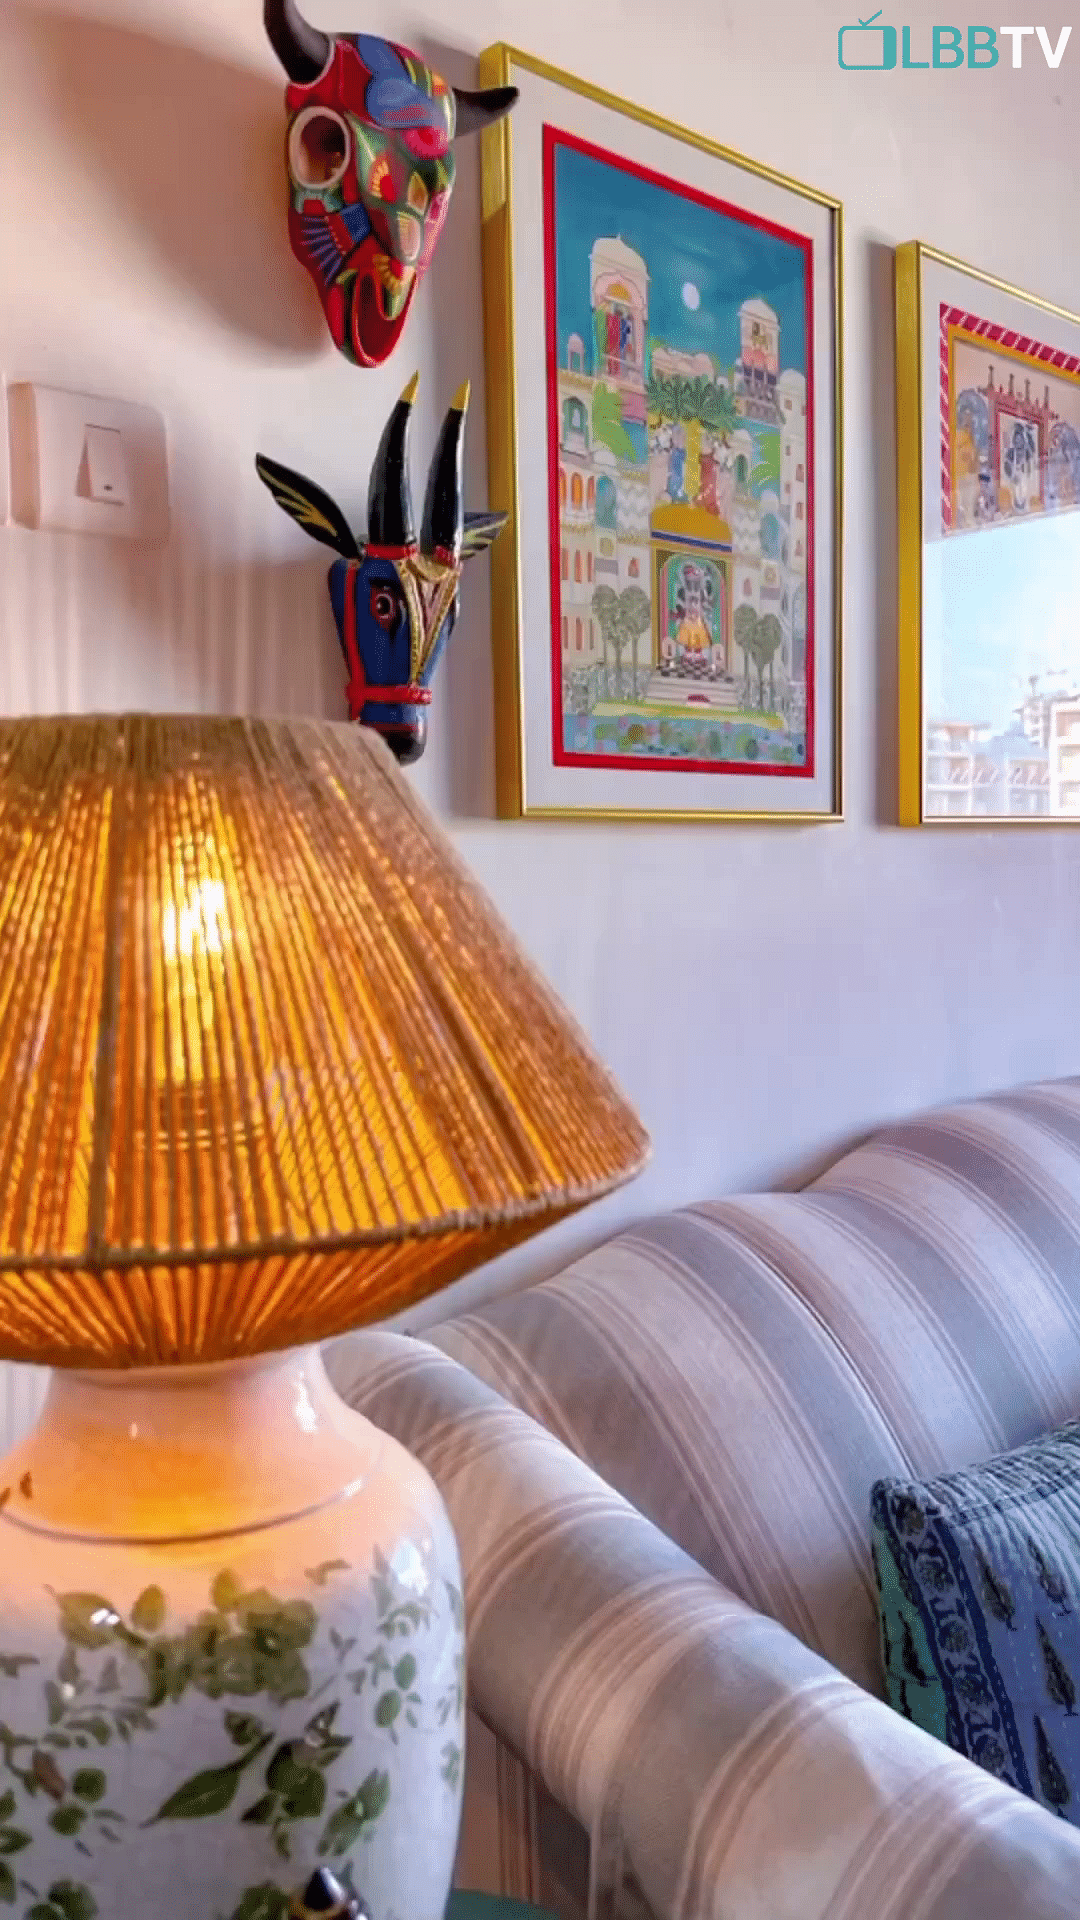 Light,Product,Orange,Textile,Interior design,Lamp,Lighting,Yellow,Wood,Couch